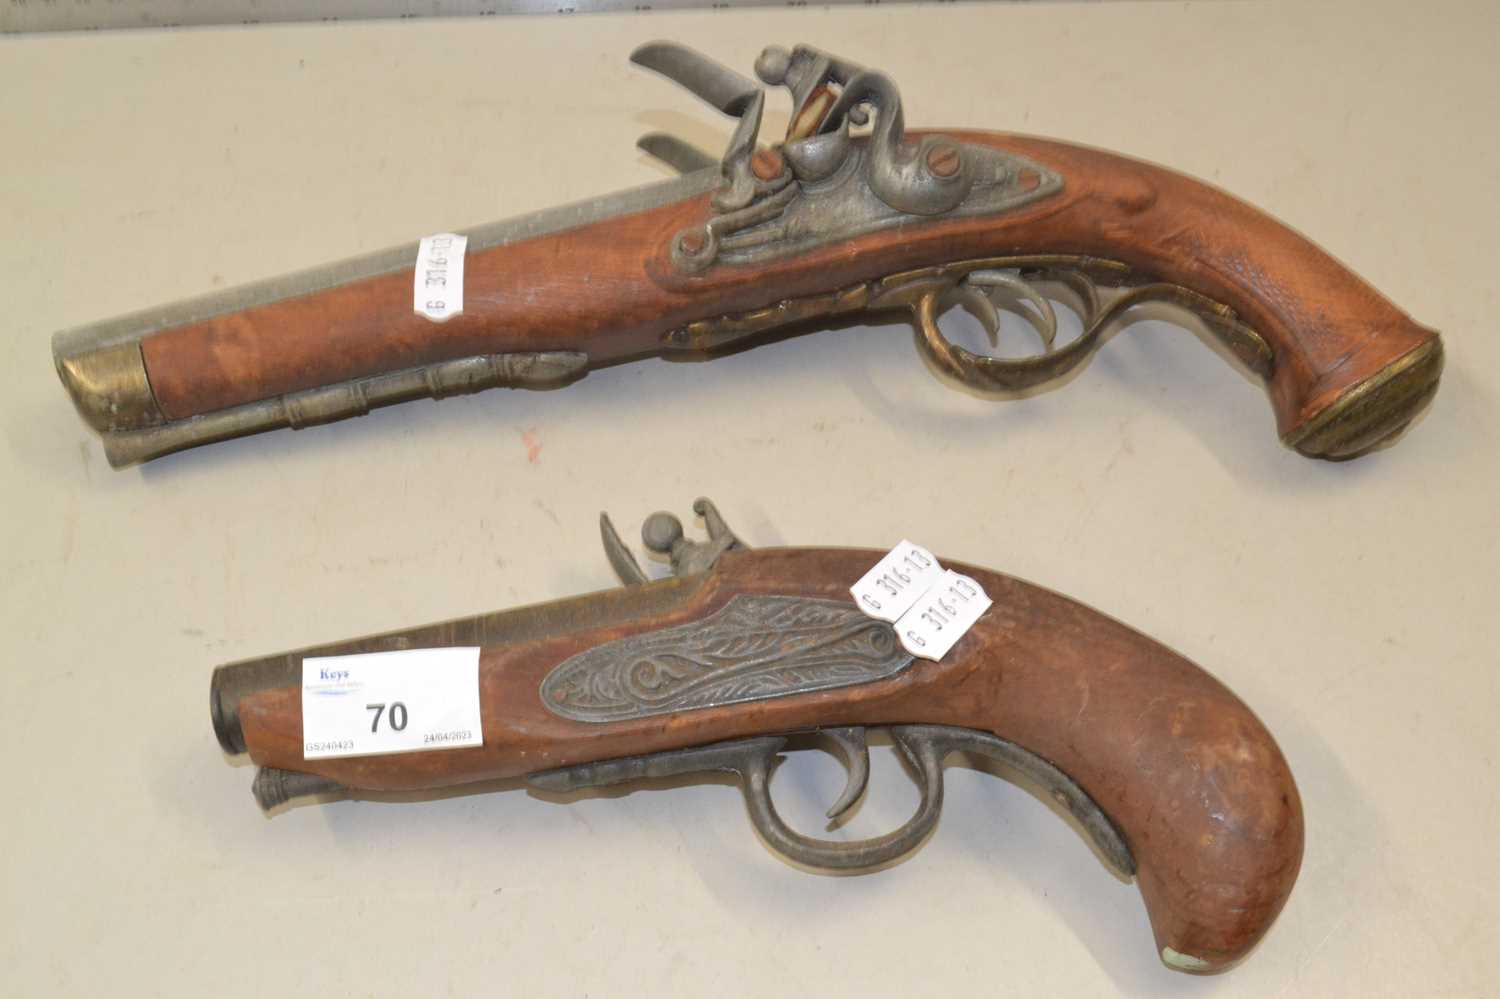 Two reproduction flint lock pistols